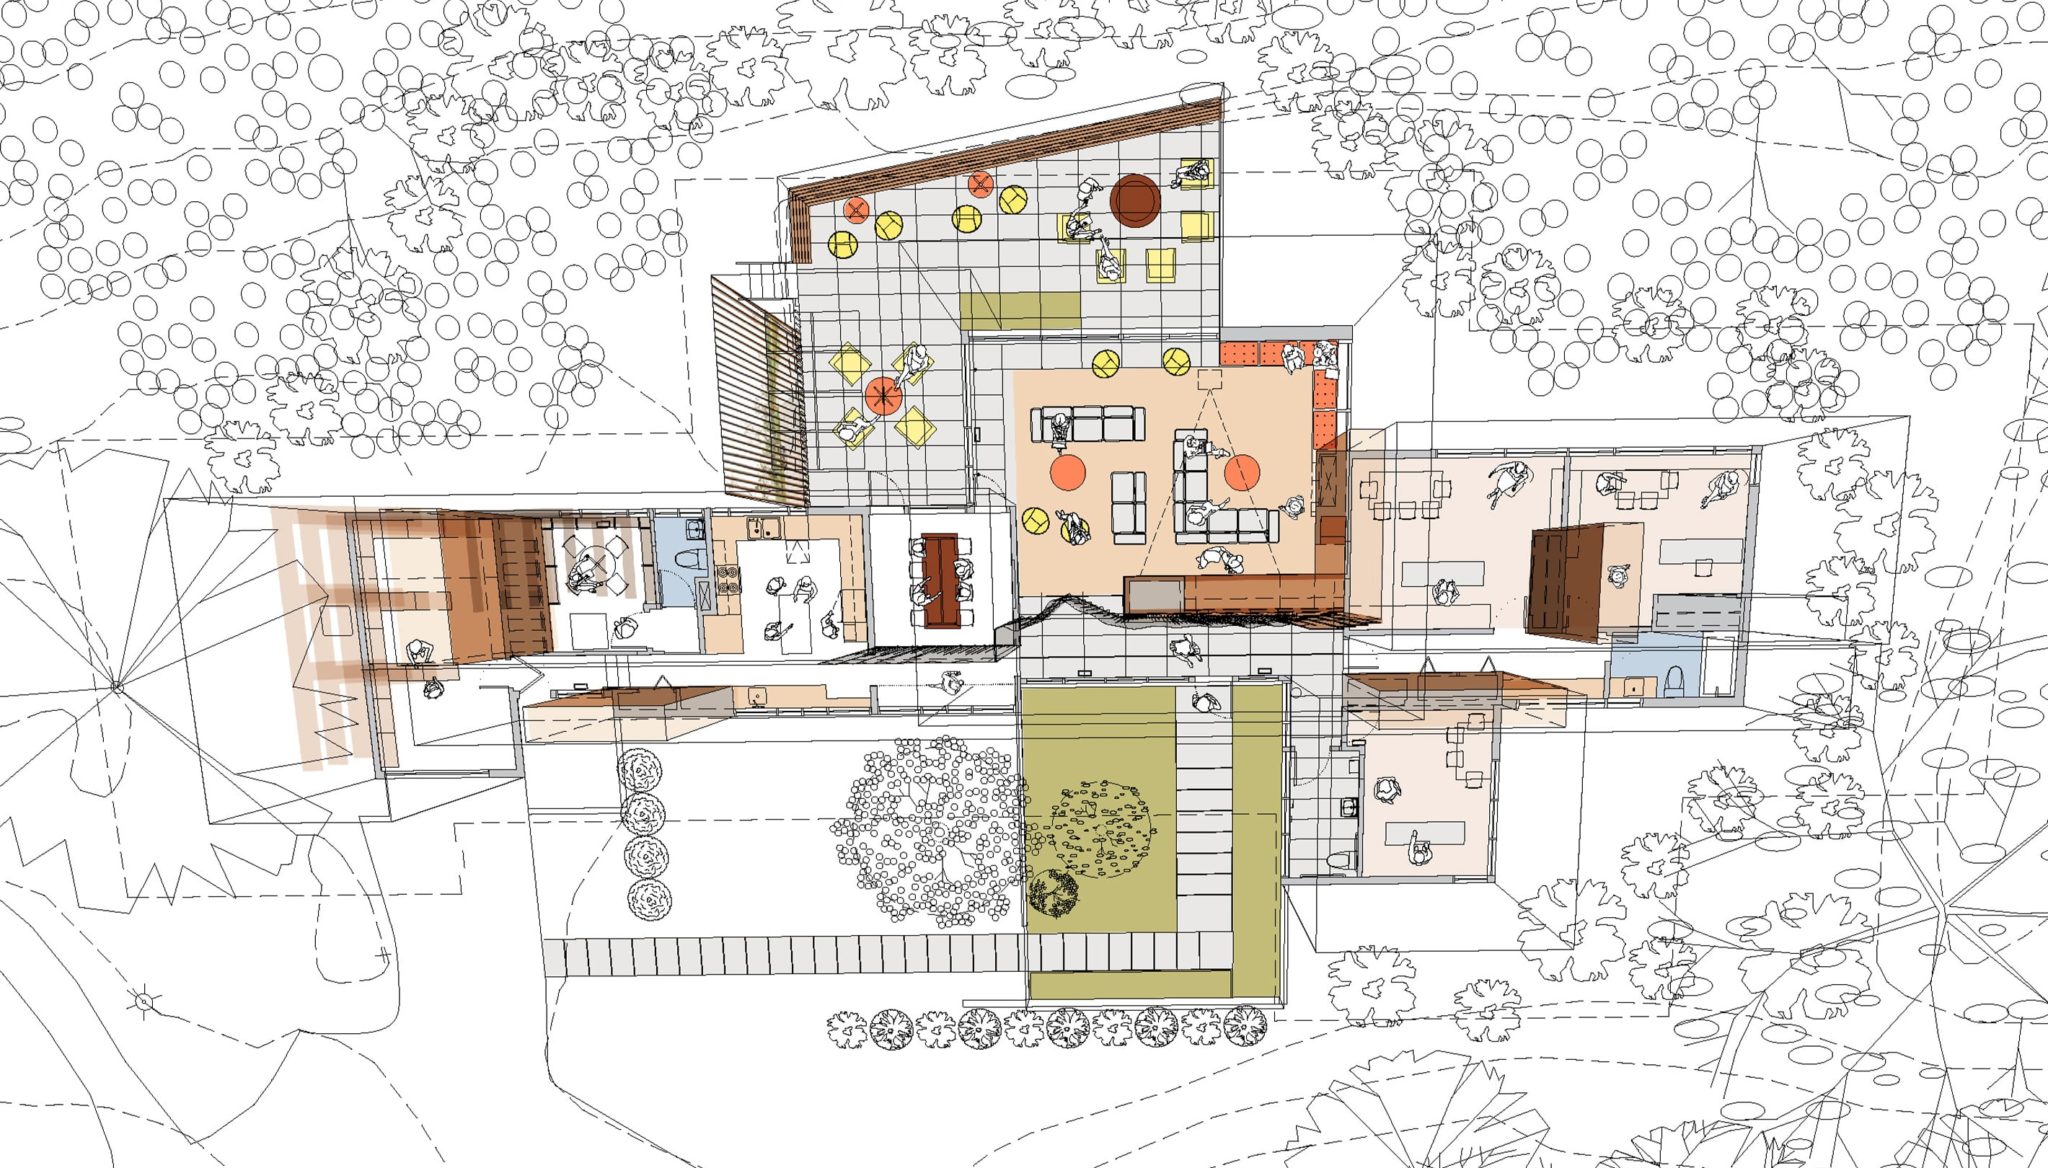 Acorns House - Overview Plan